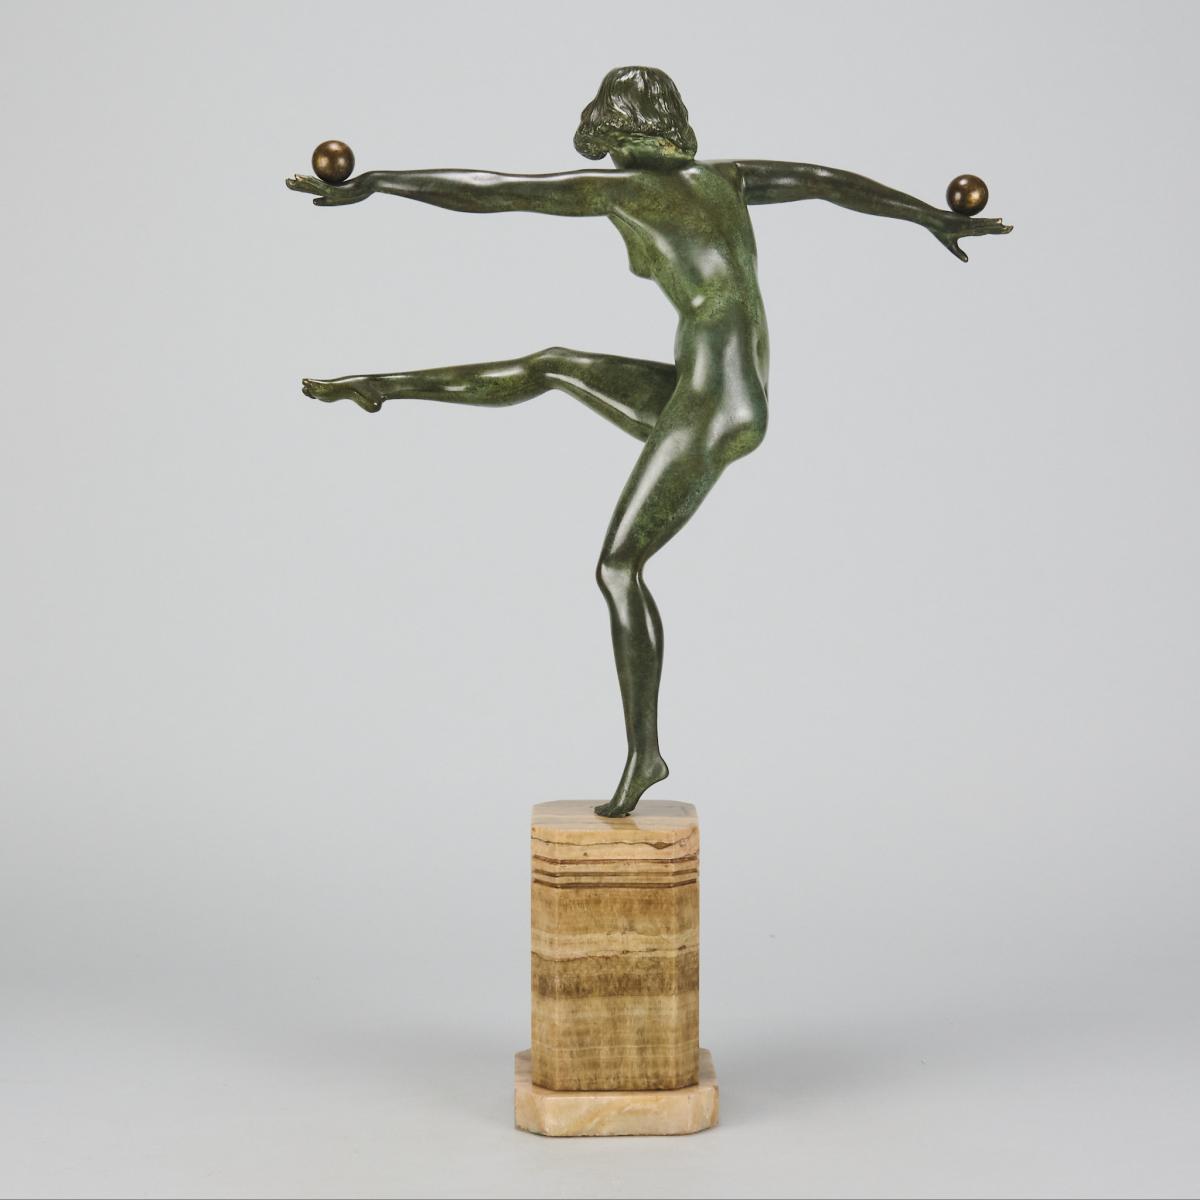 Art Deco Sculpture entitled "Balancing" by Marcel Bouraine - Circa 1930